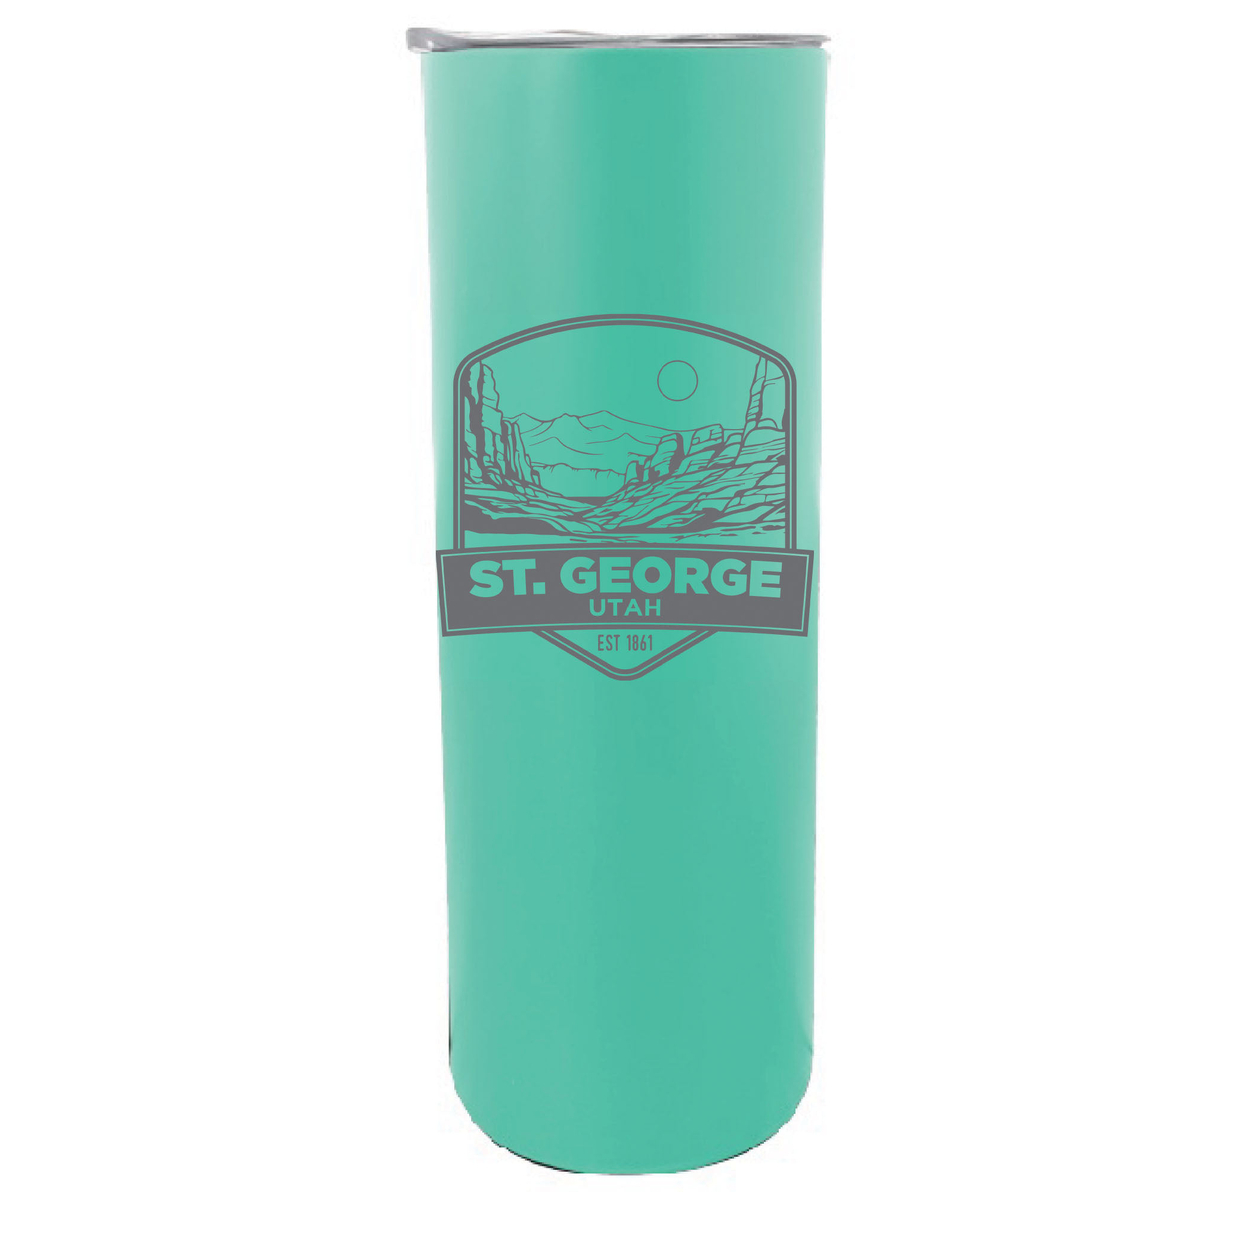 St. George Utah Souvenir 20 Oz Engraved Insulated Stainless Steel Skinny Tumbler - Seafoam,,Single Unit